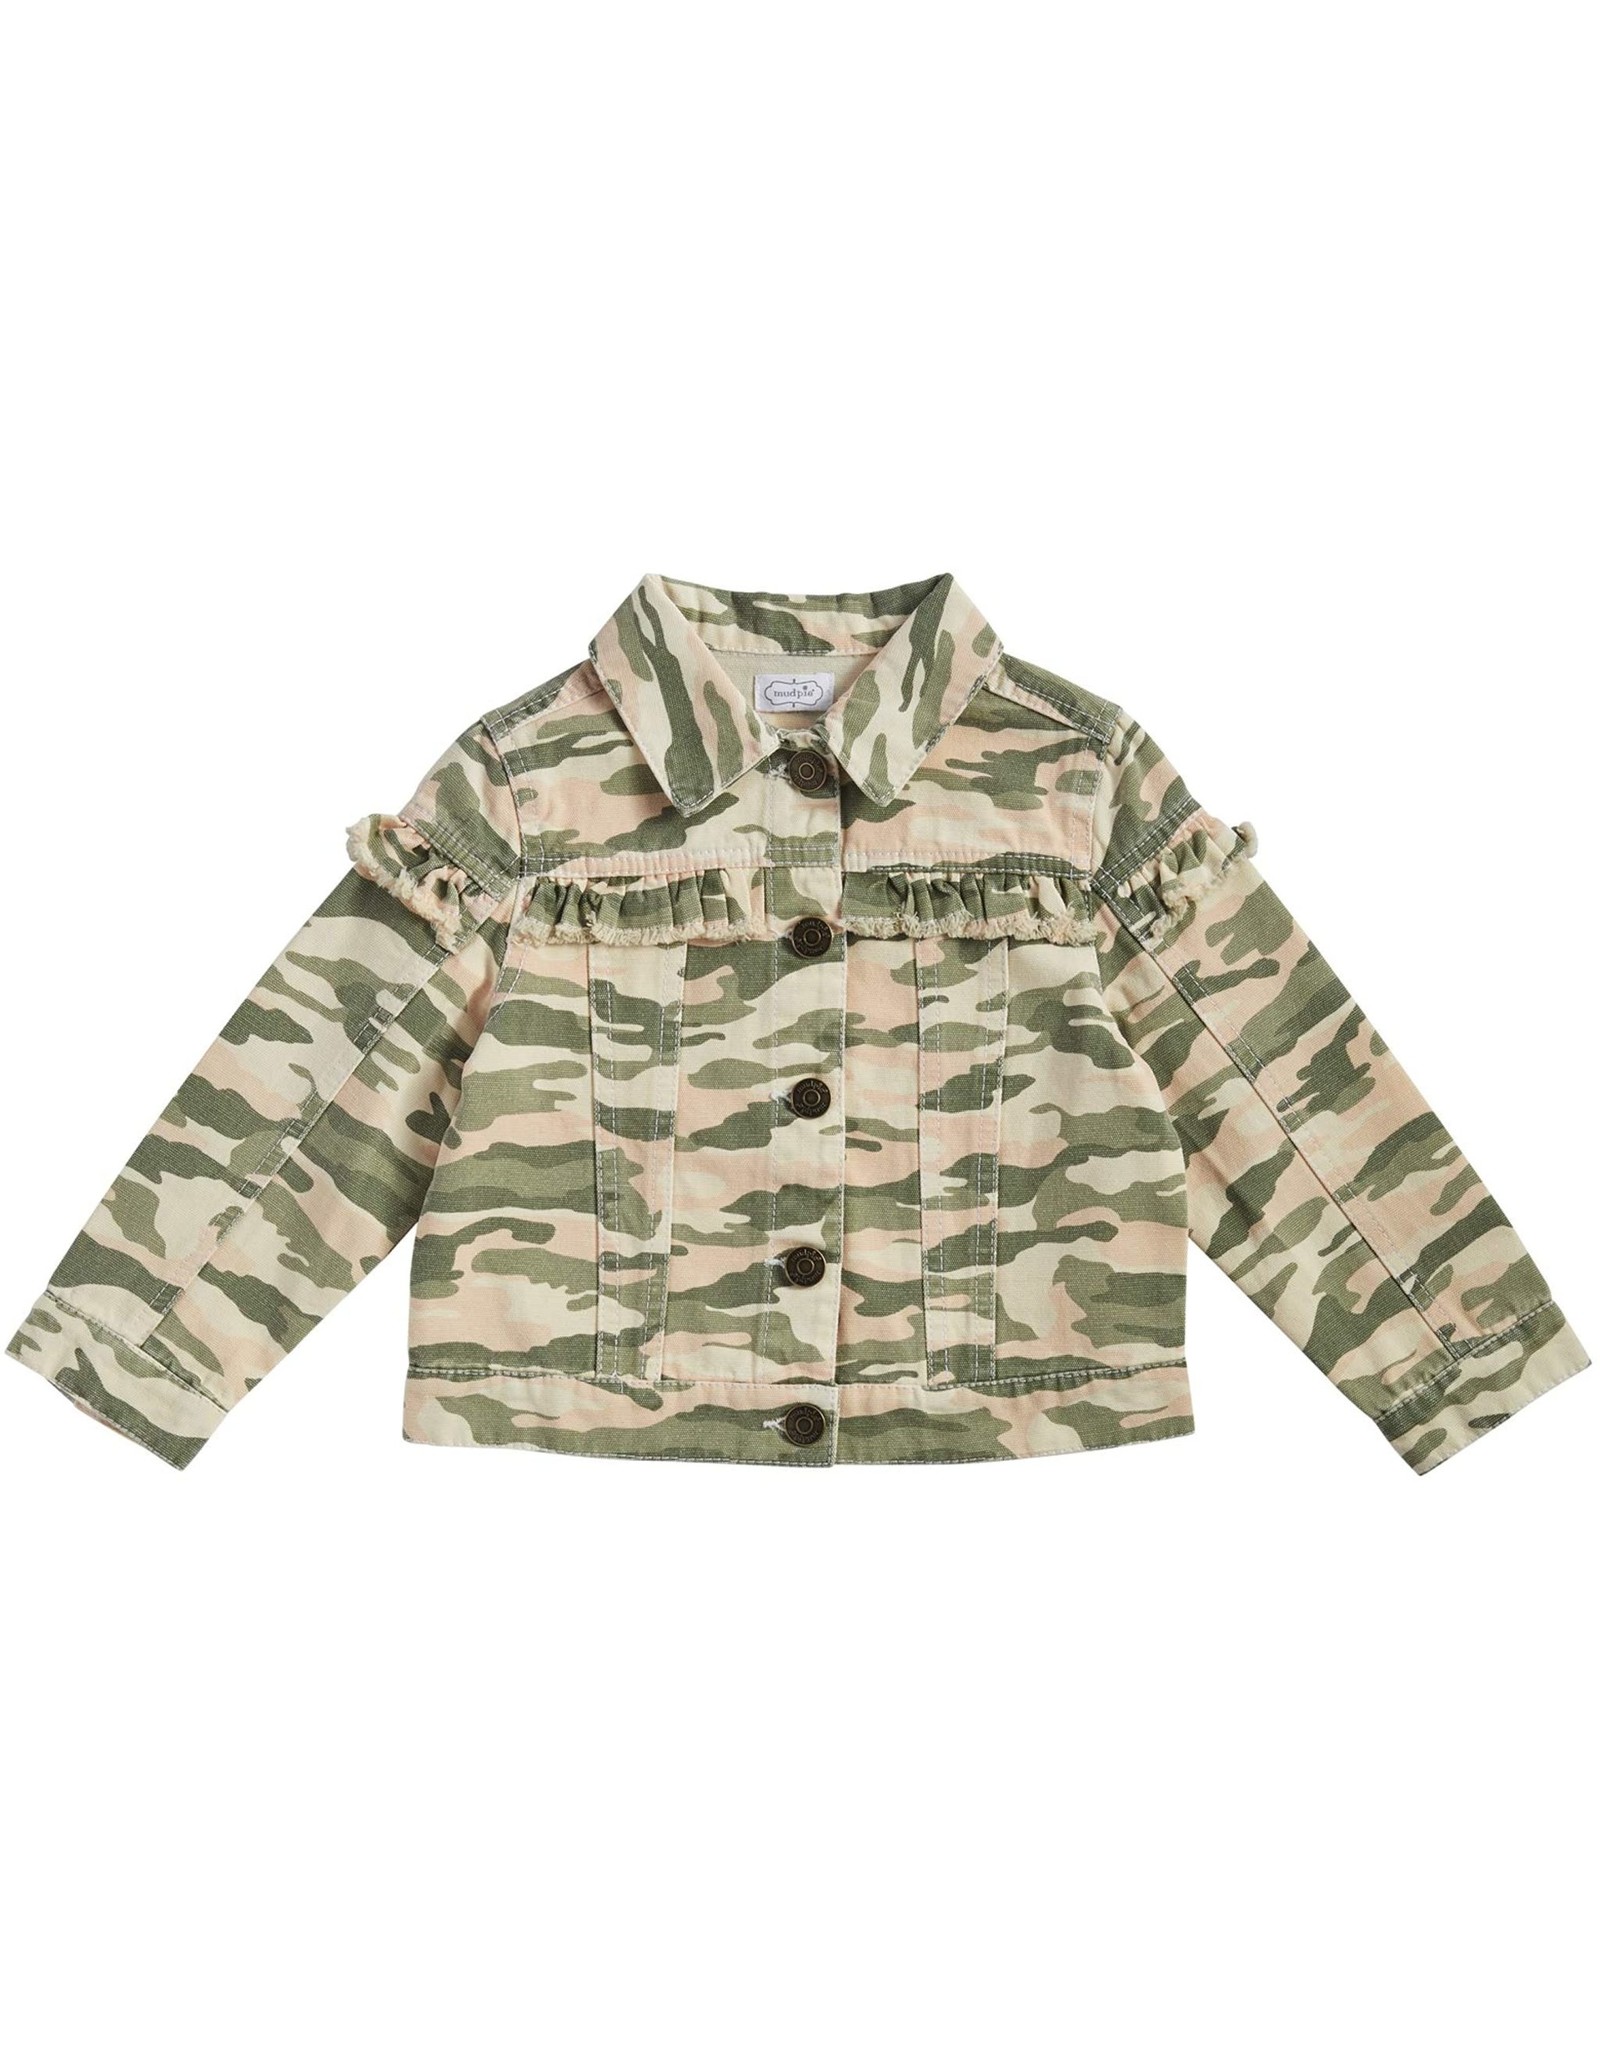 Mud Pie Kids Clothing Camouflage Canvas Ruffle Jacket 4T-5T